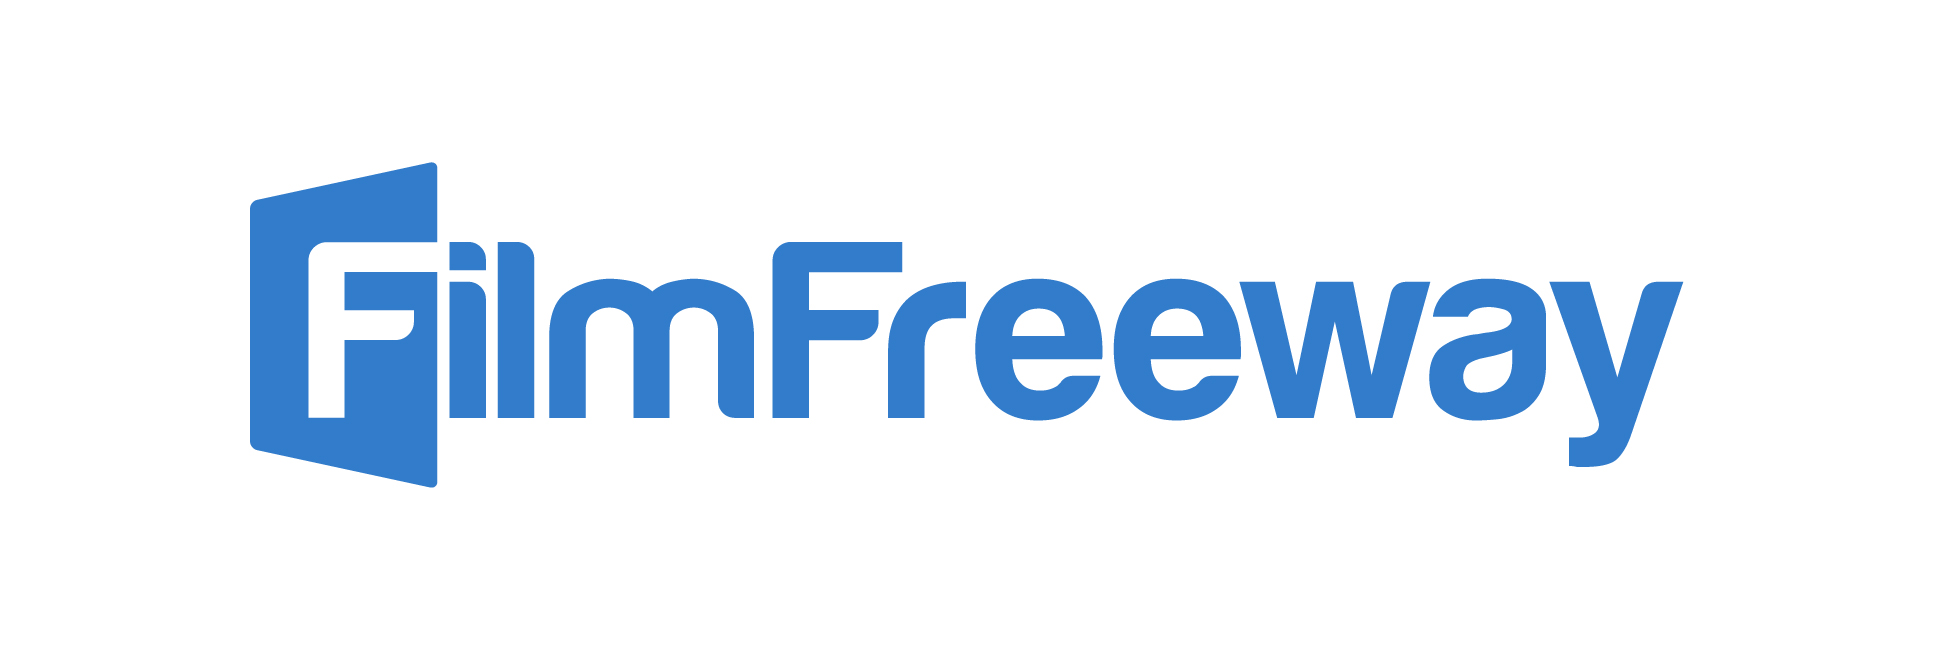 Image of the filmfreeway logo